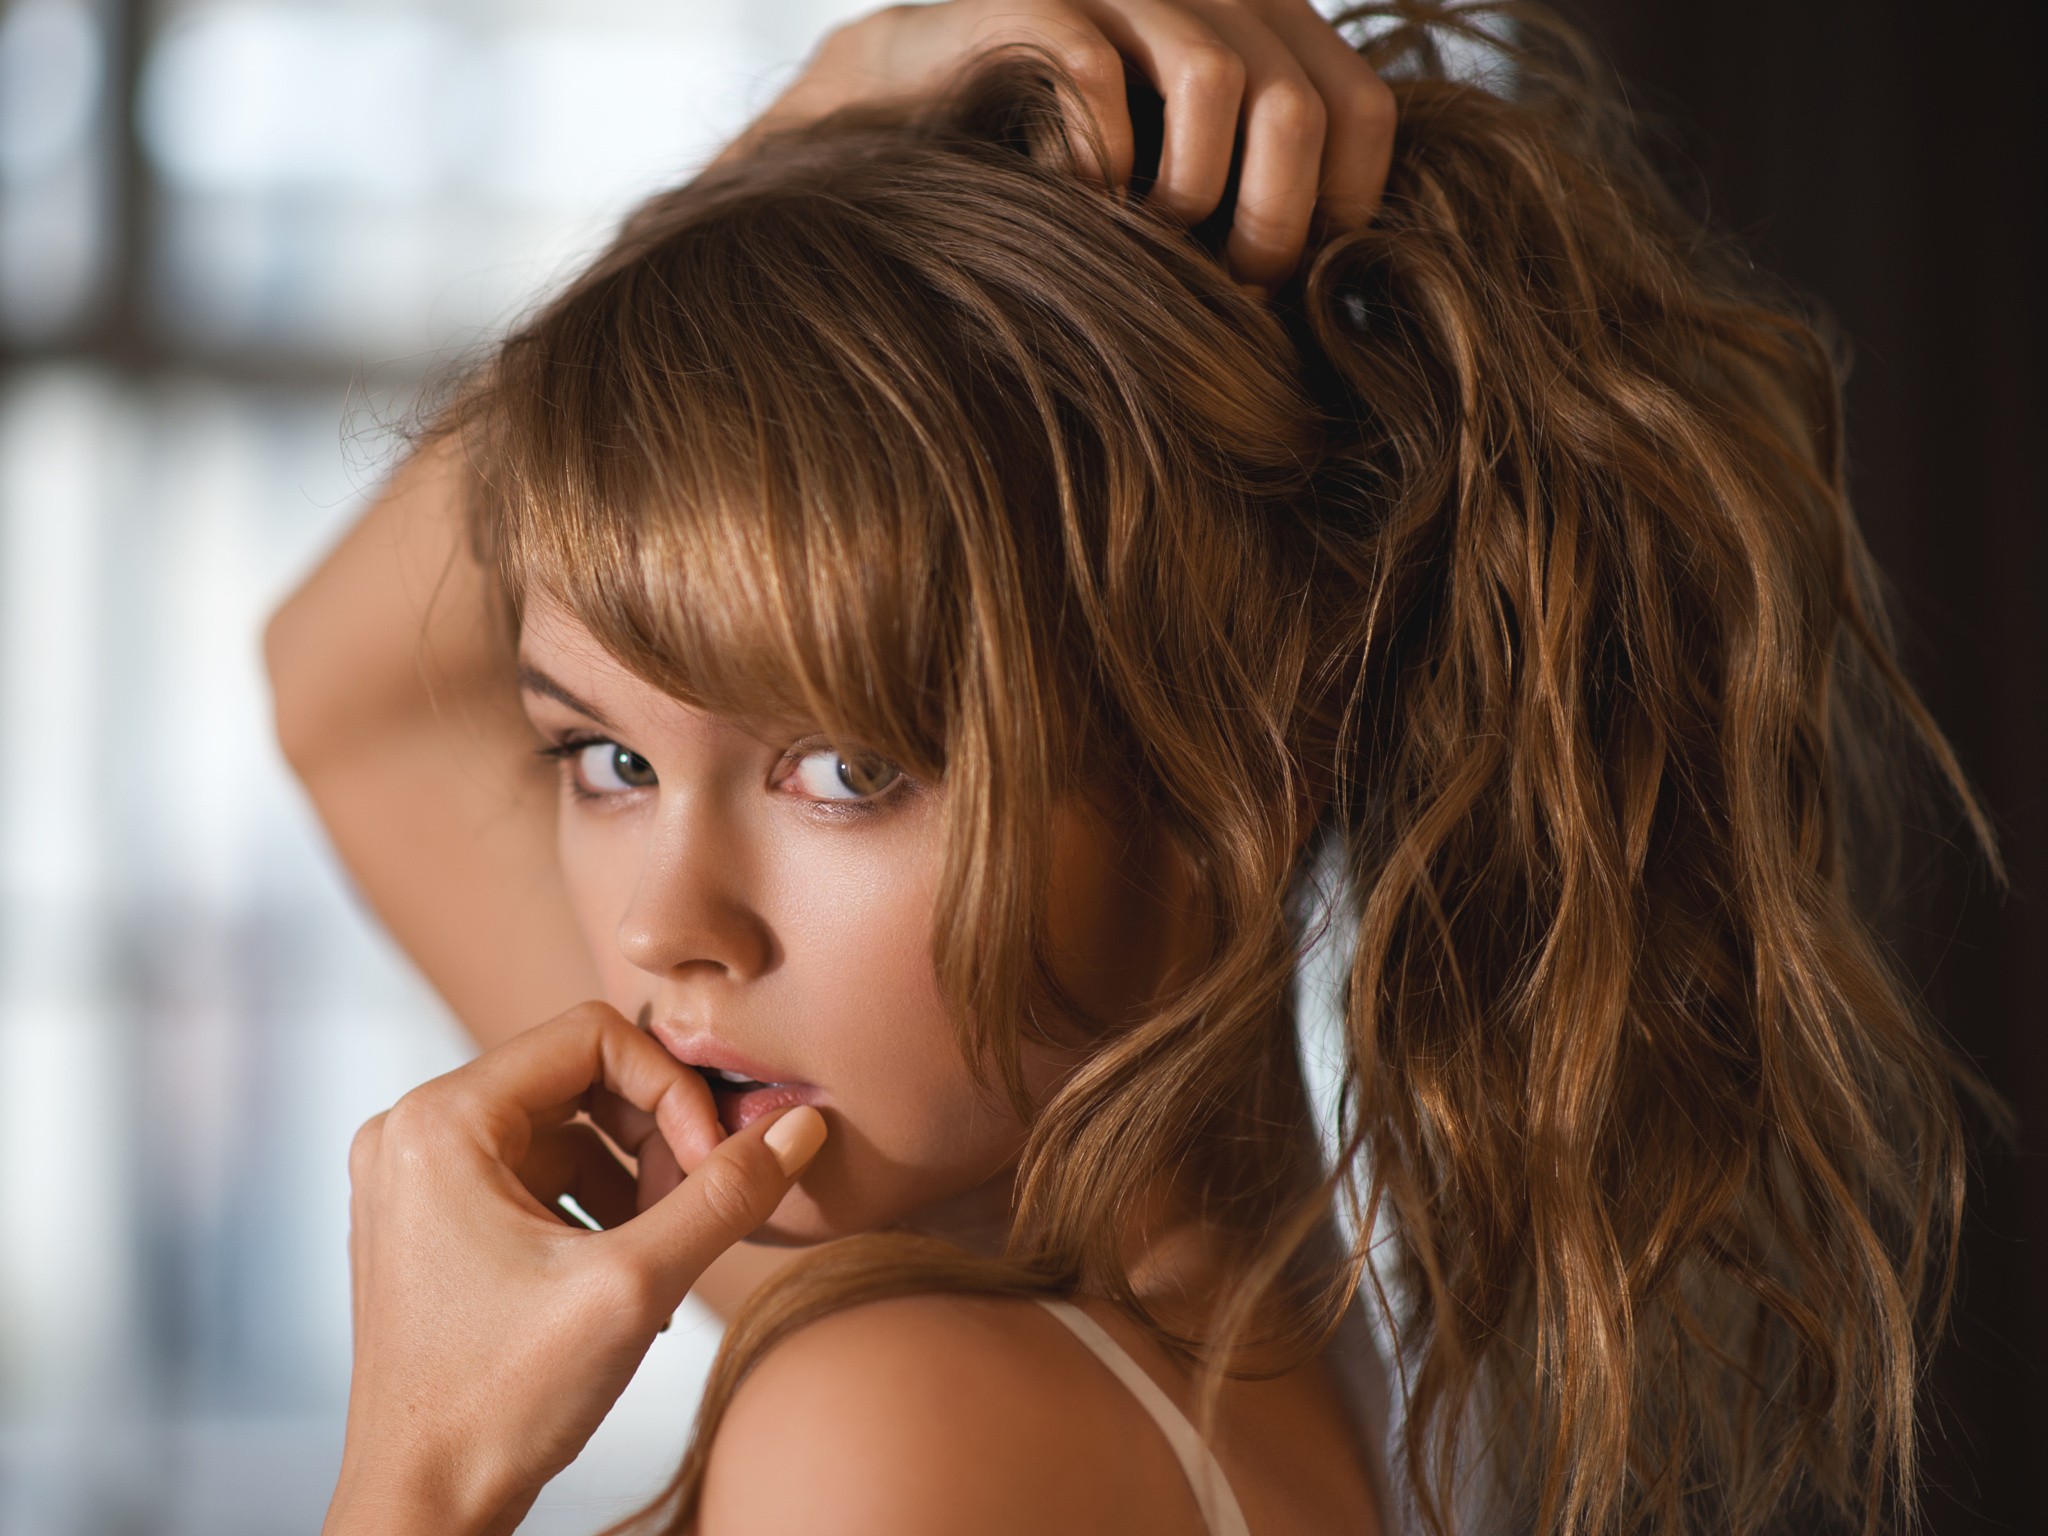 Anastasia Scheglova Women Model Blonde Face Looking At Viewer Green Eyes Women Indoors